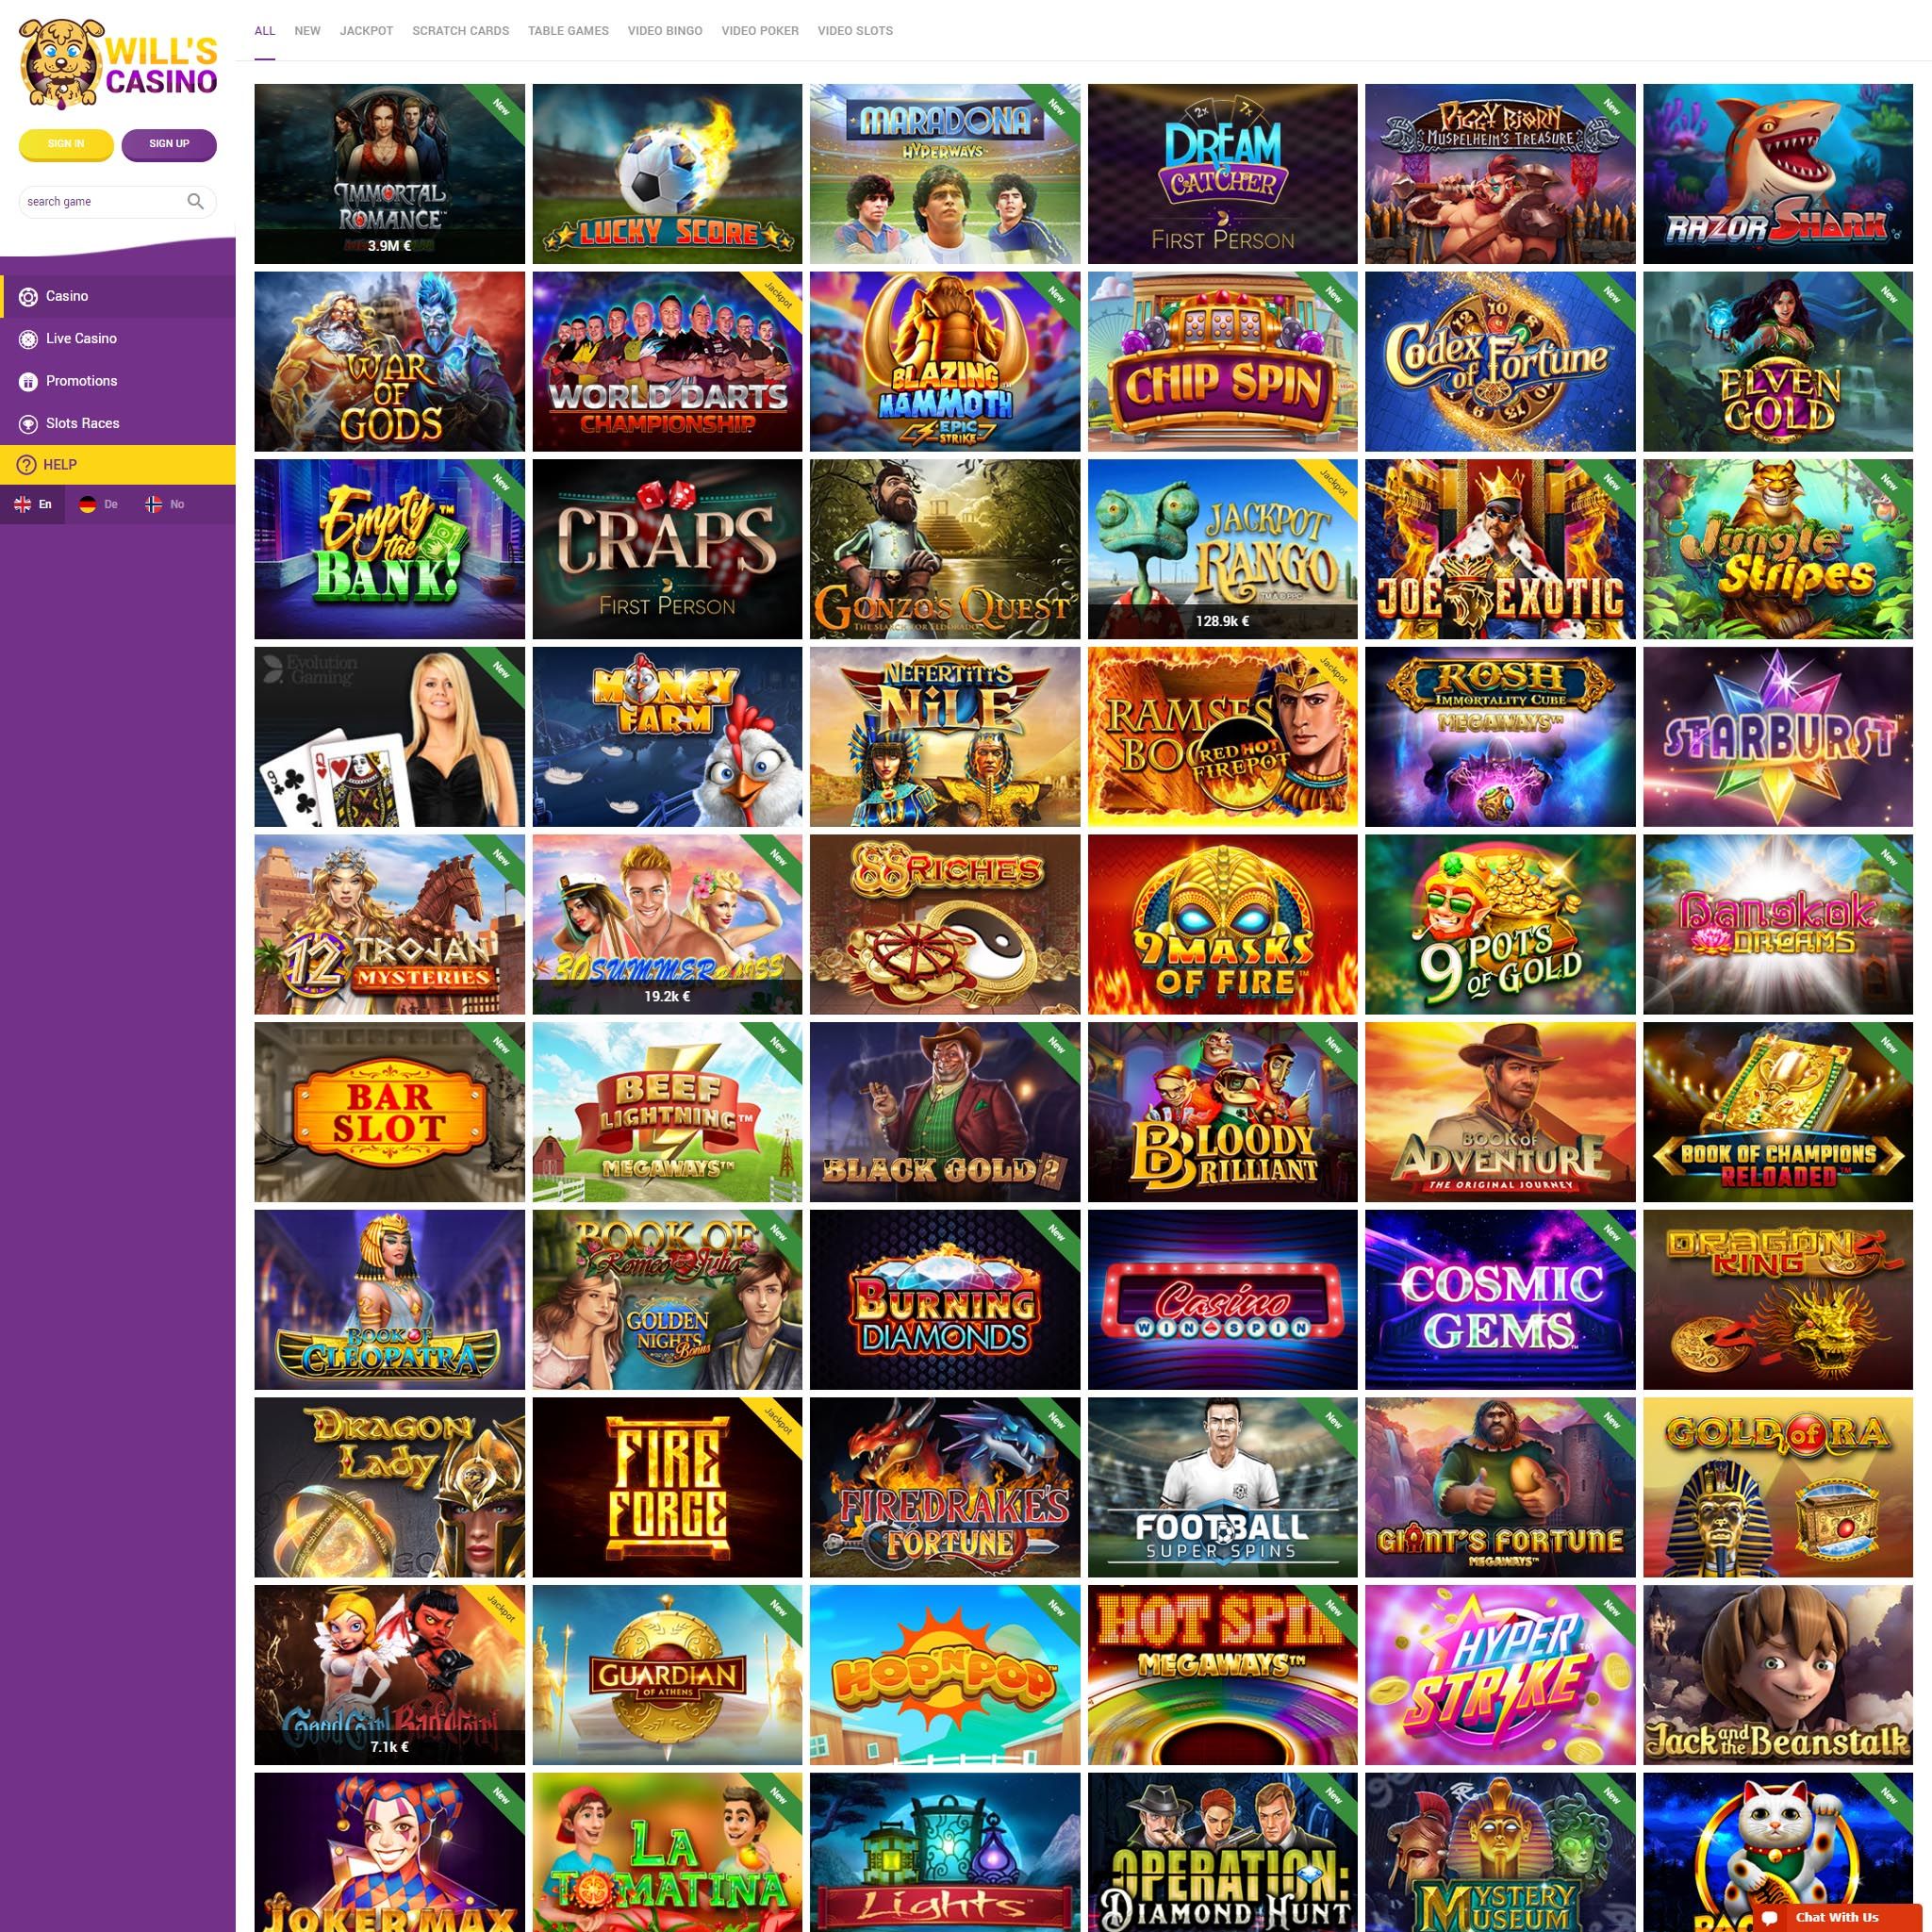 Wills Casino full games catalogue